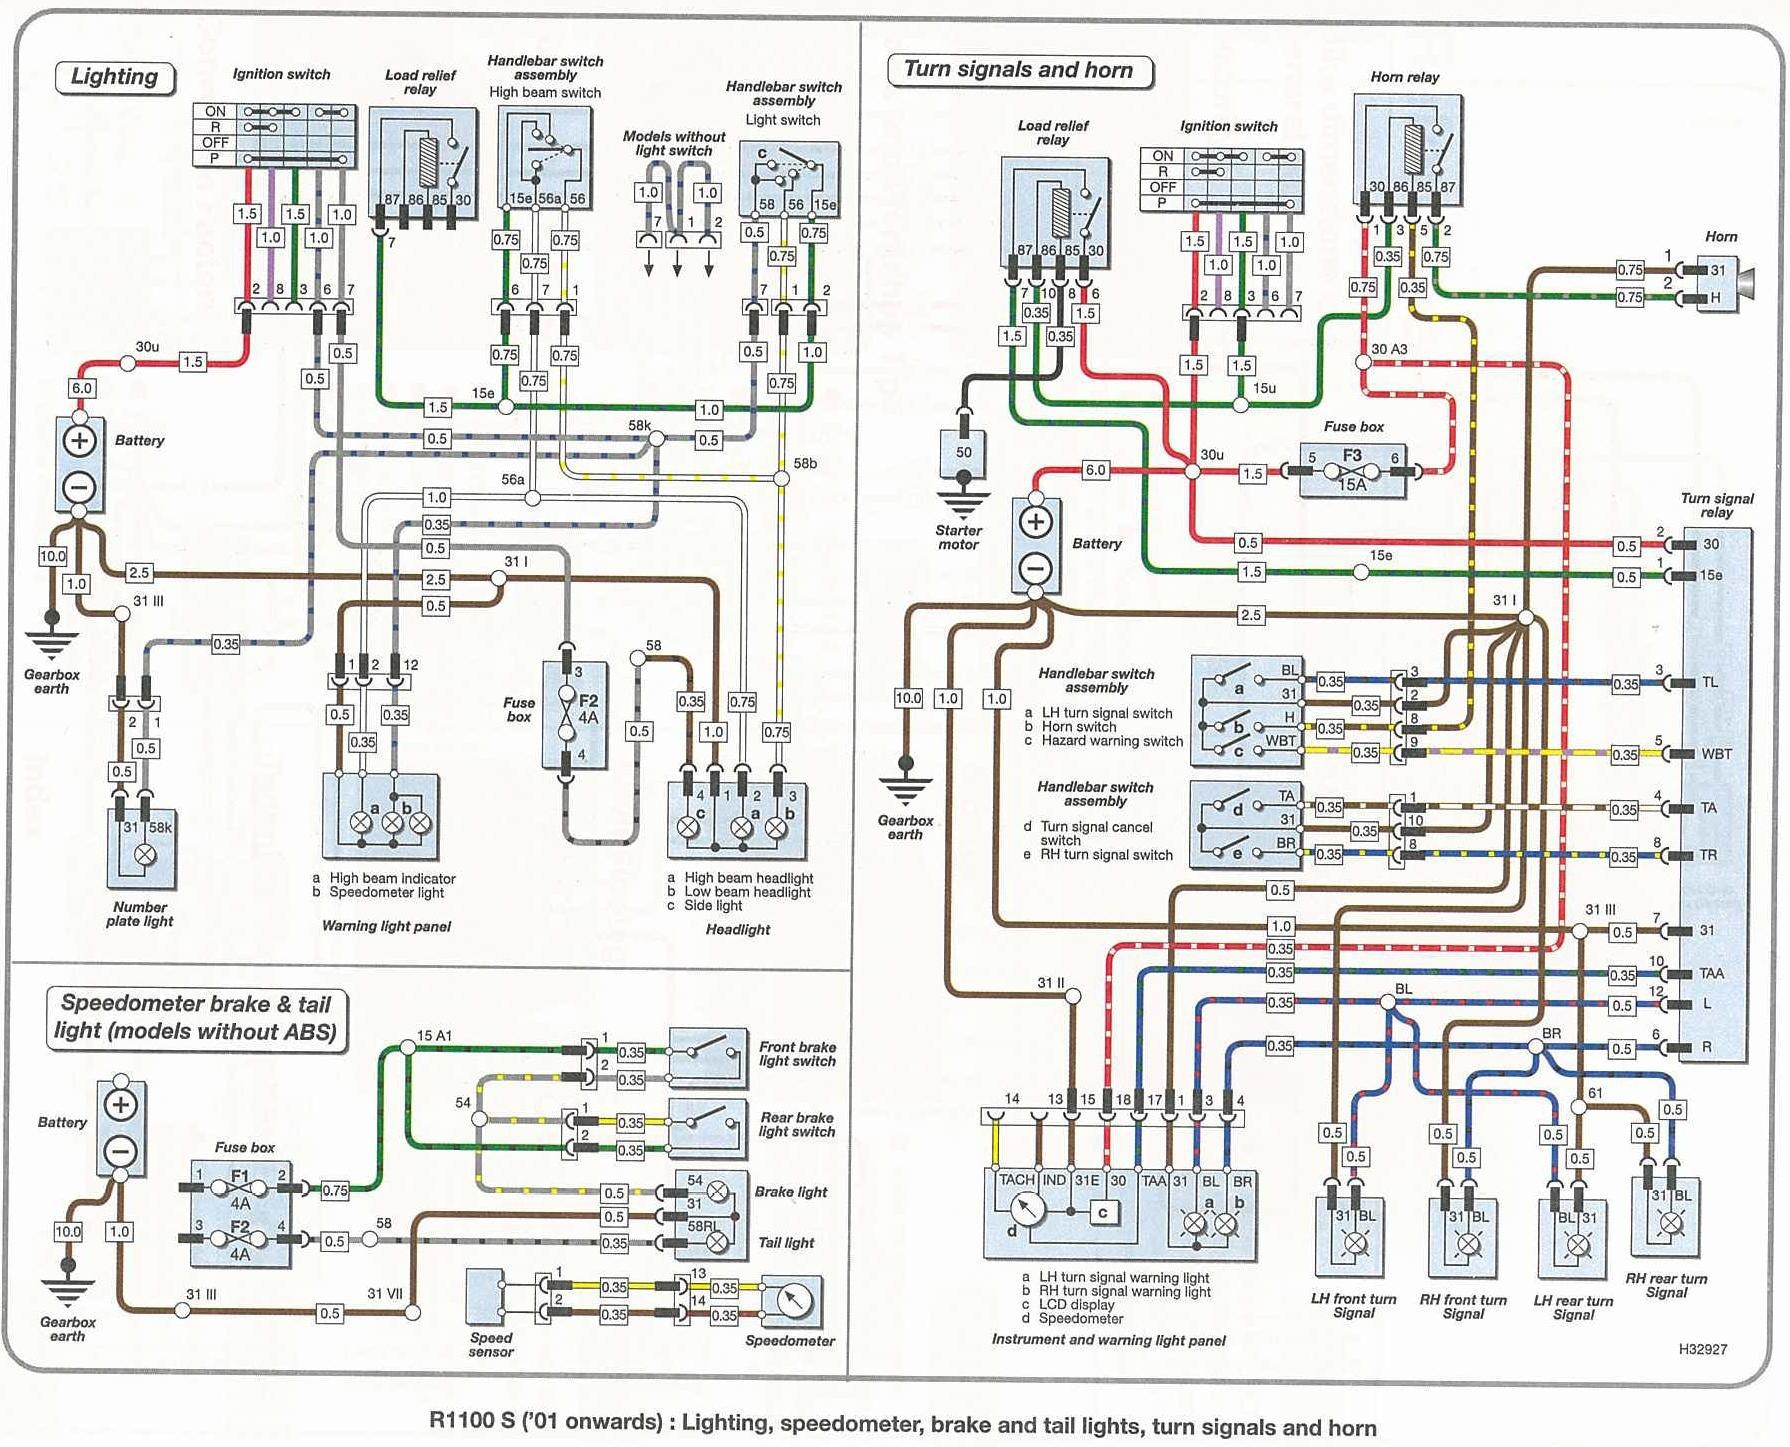 E46 Vacuum Diagram Bmw E46 Wiring Diagram Download Wiring Diagrams Konsult Of E46 Vacuum Diagram